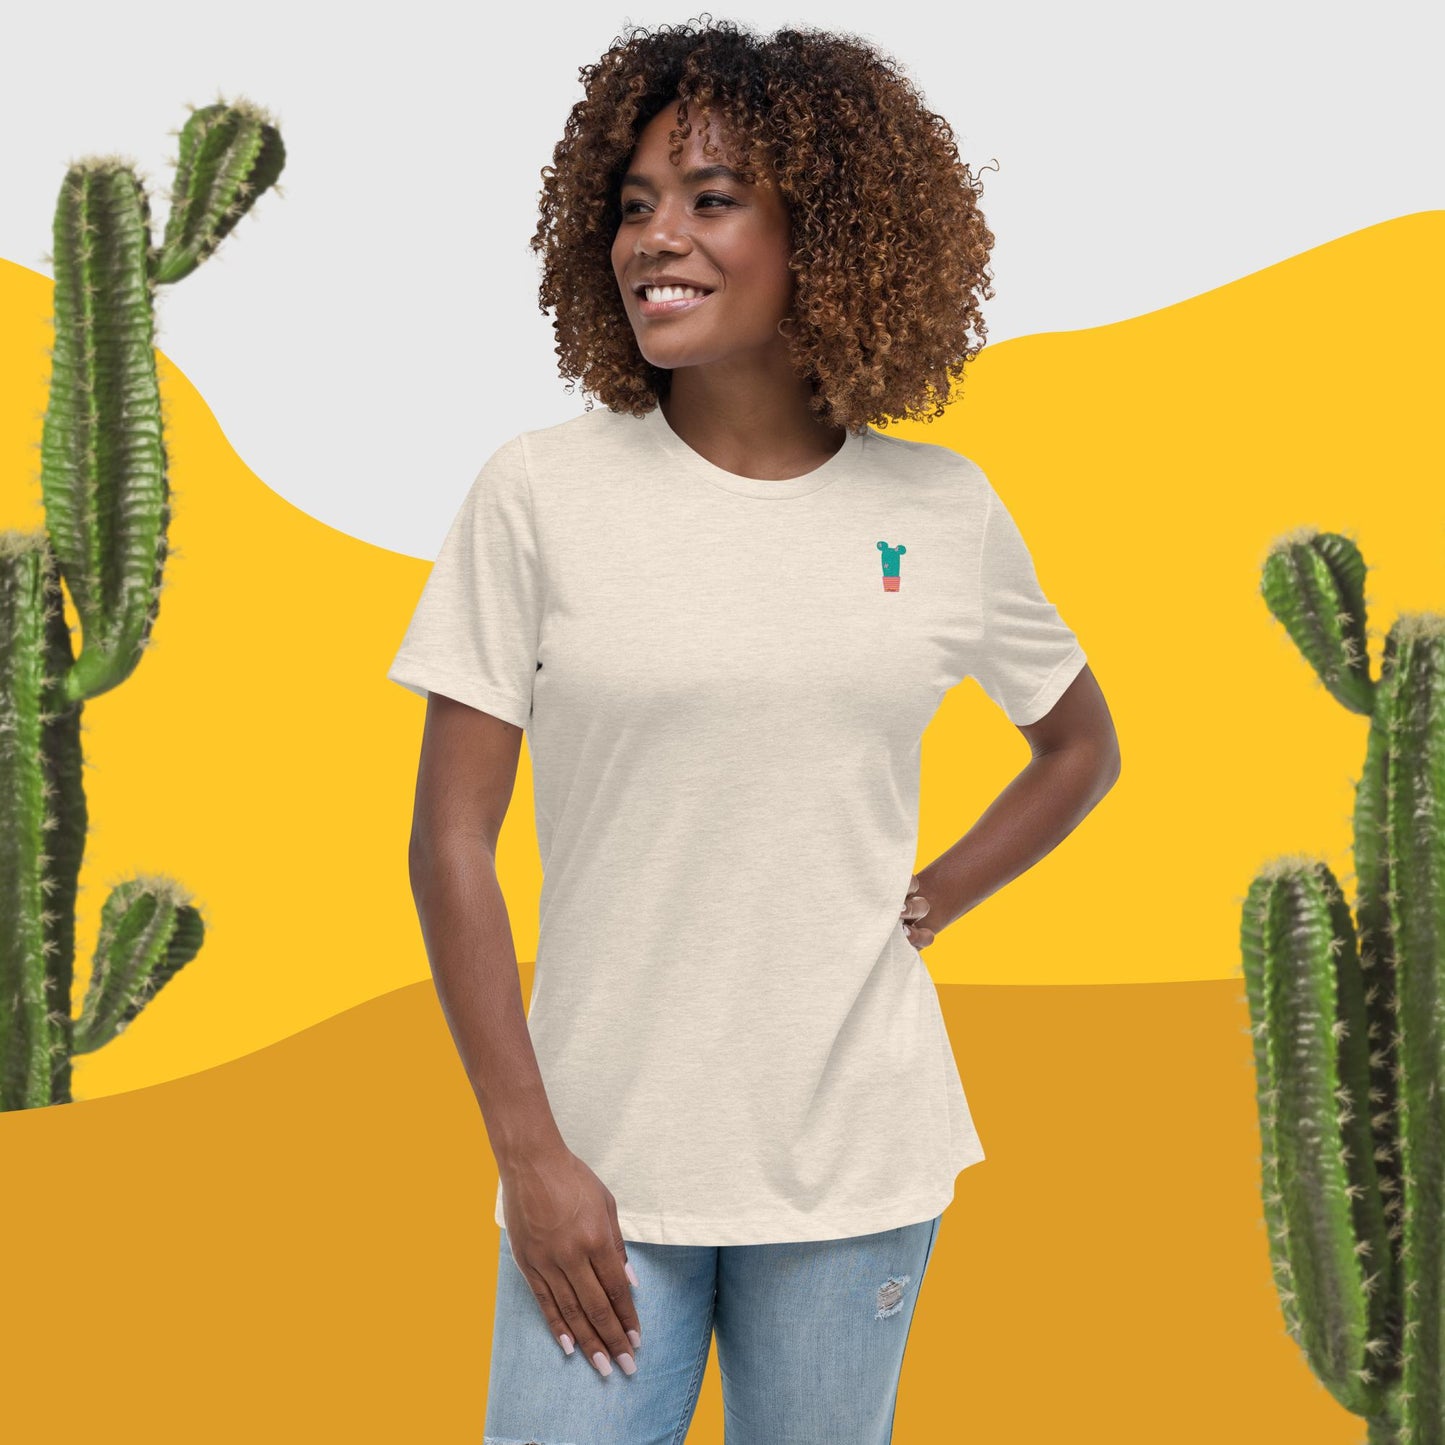 Sharp by Design 'Pricks' No.9 – Women's Relaxed T-Shirt